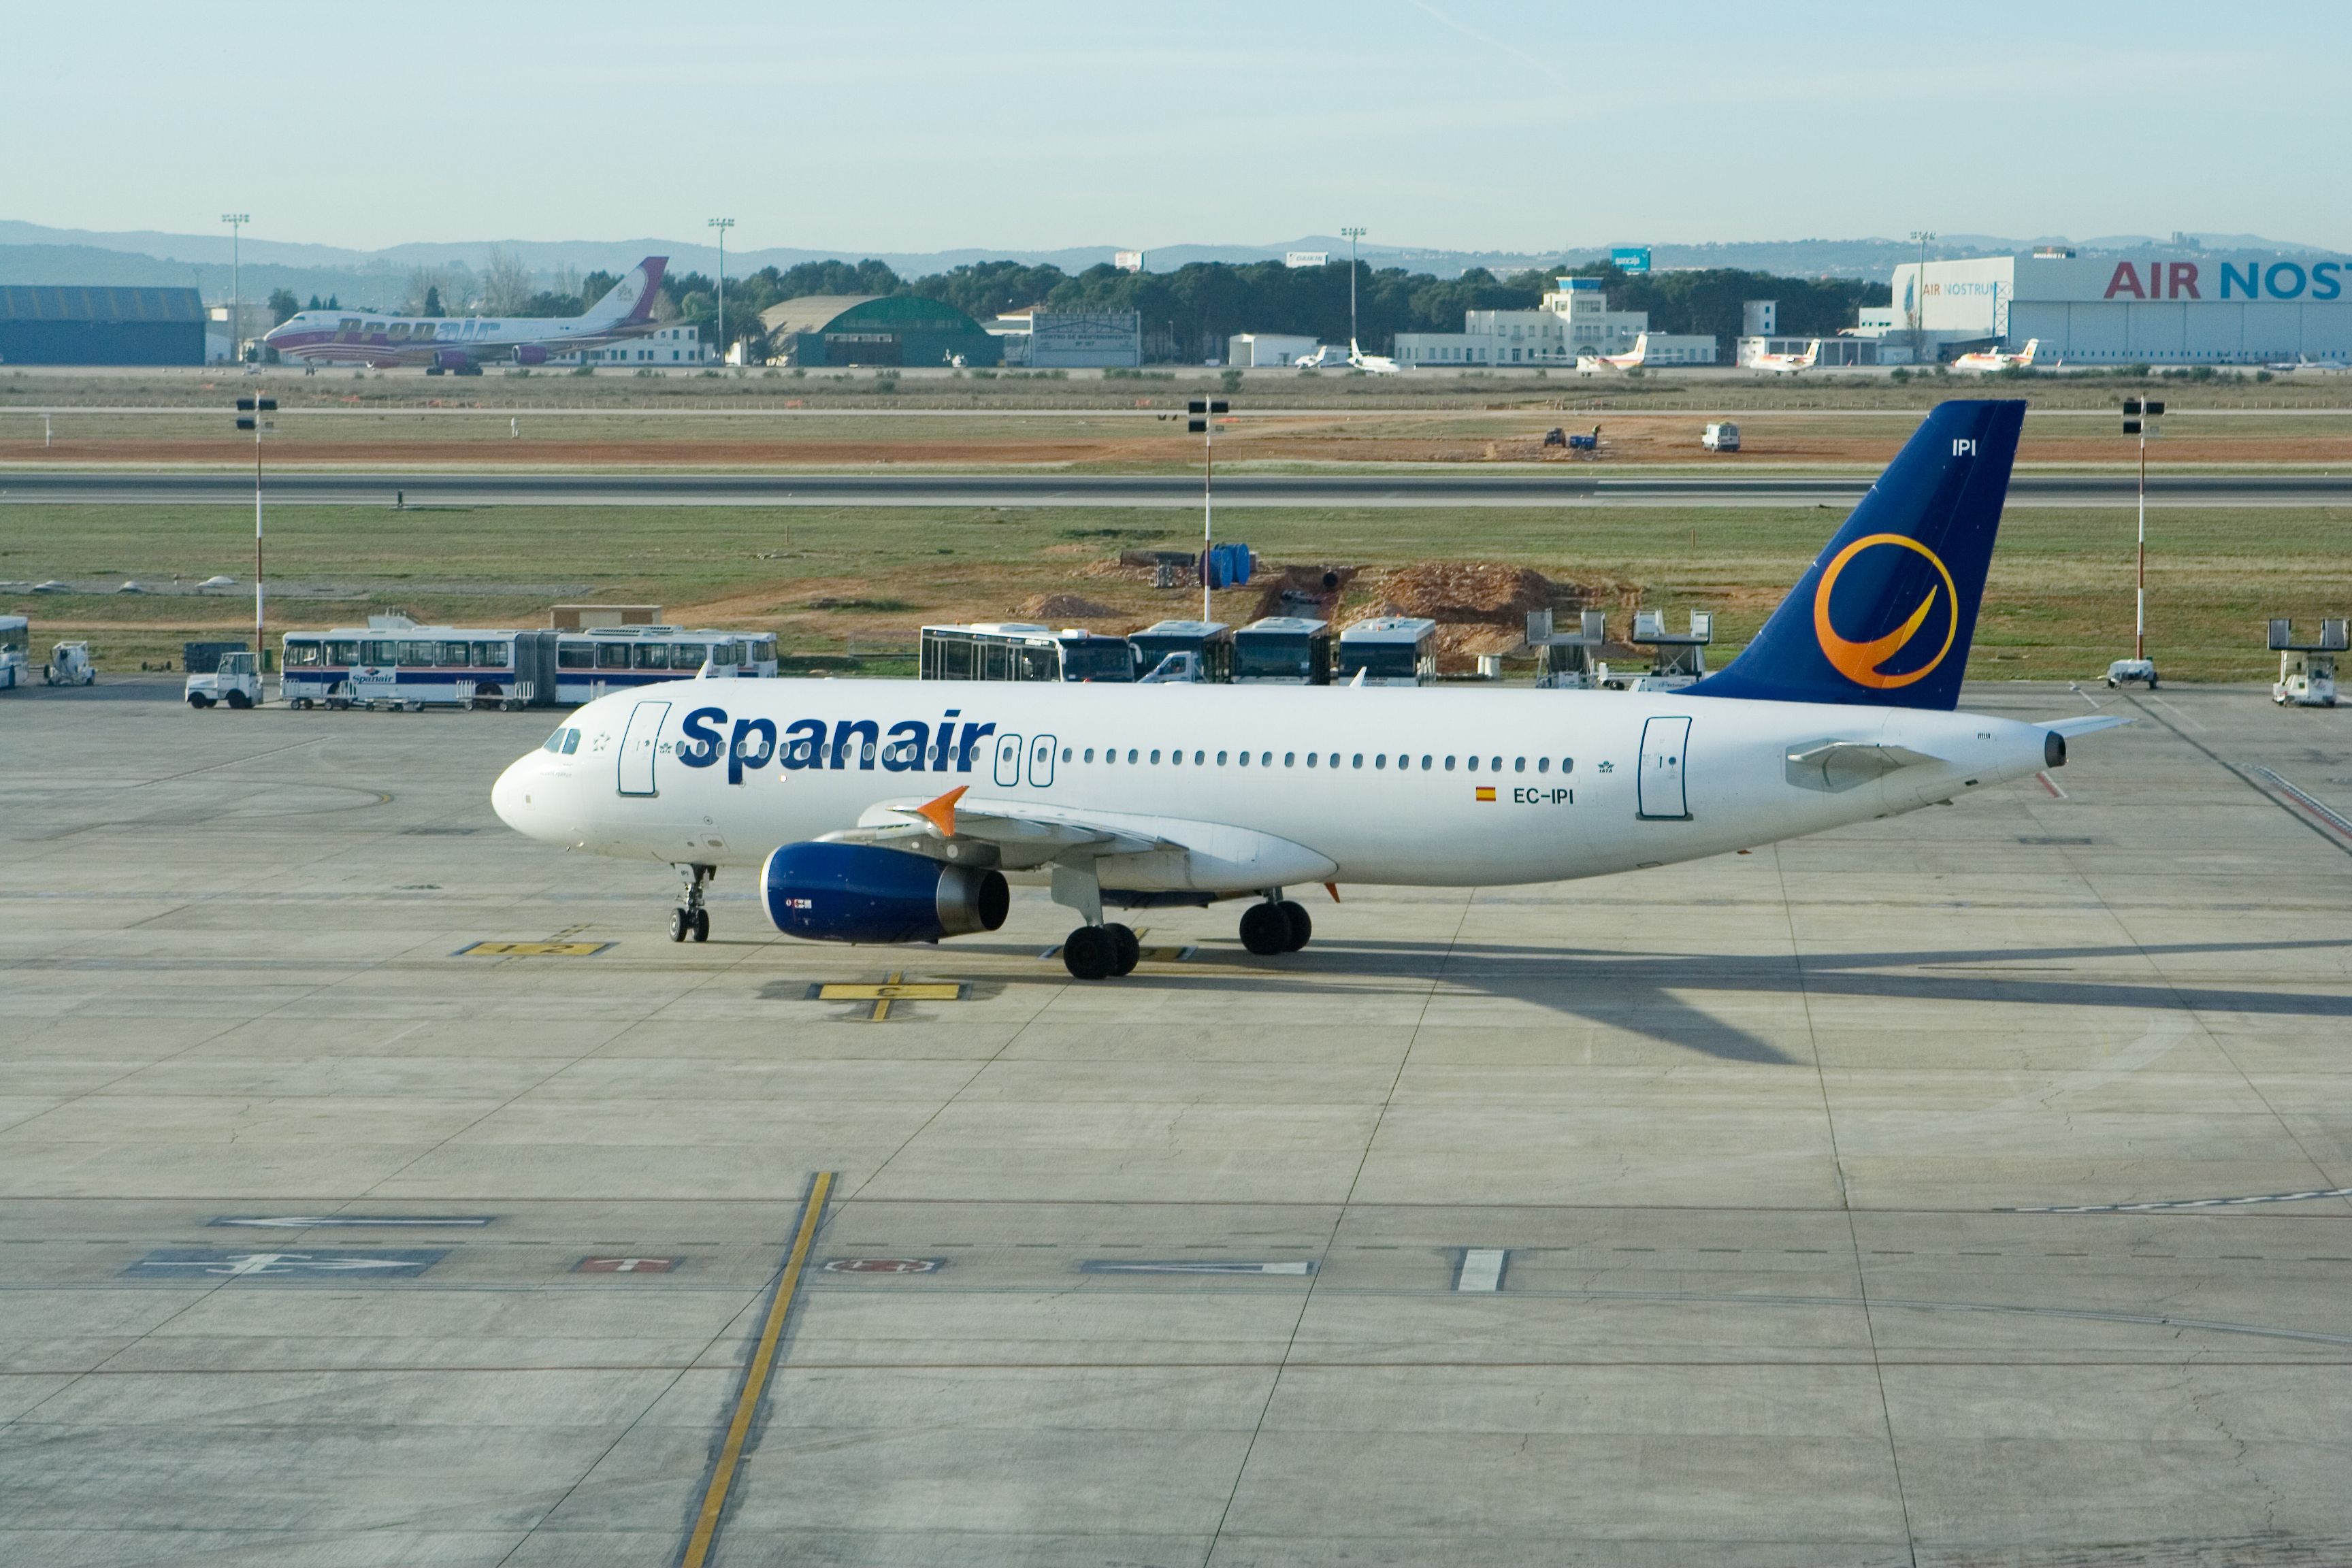 A Spanair aircraft taxiing to the runway.